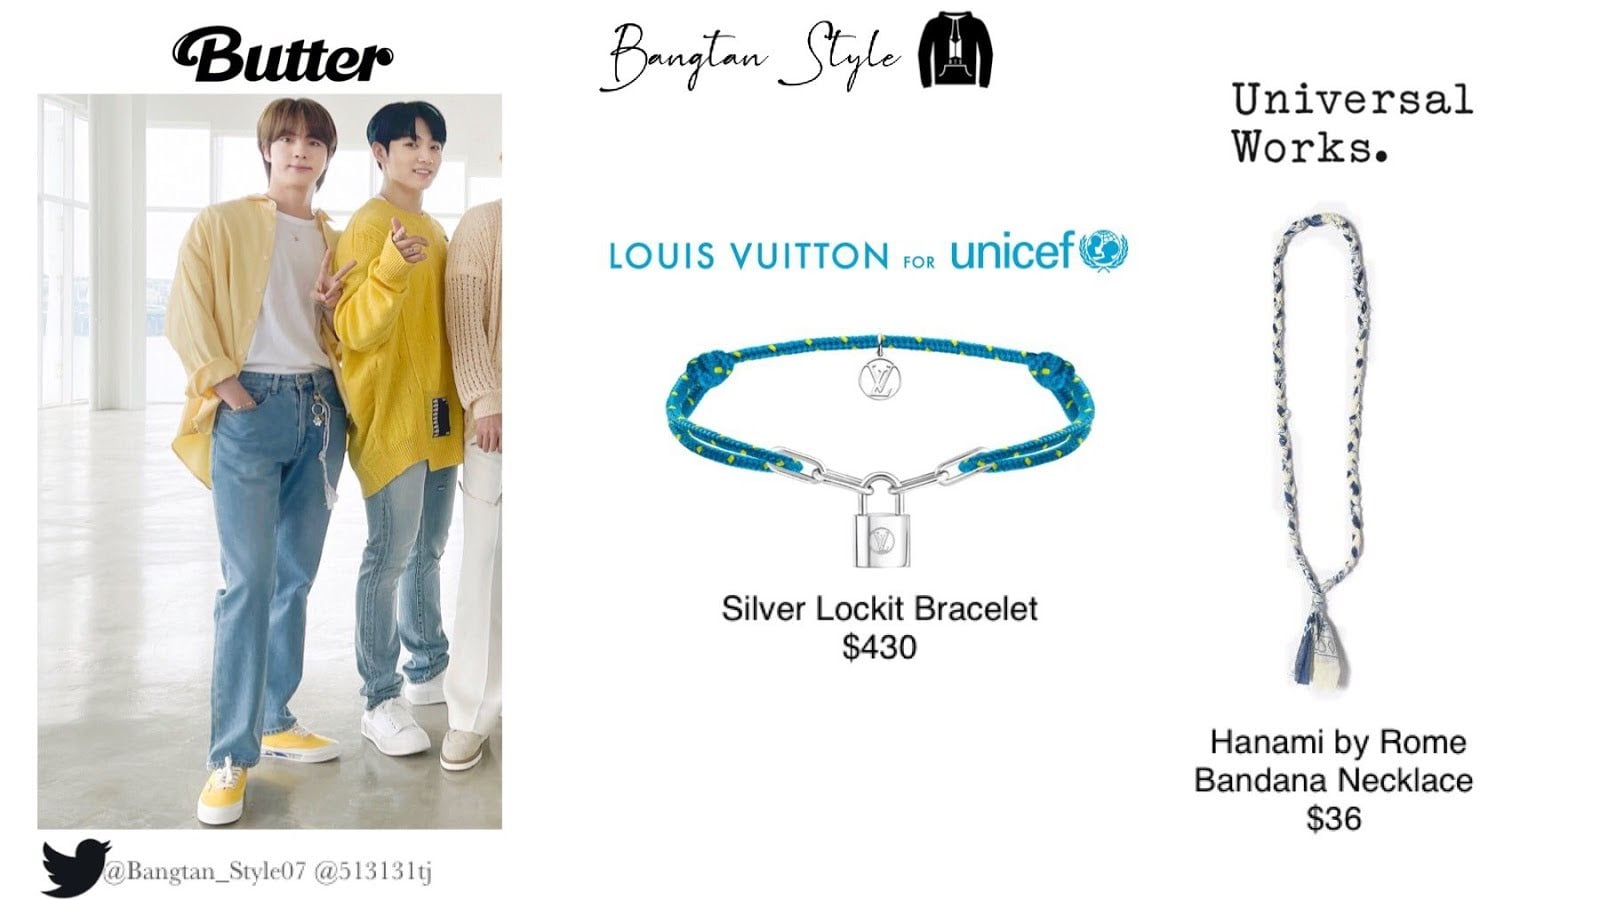 Anh đeo thêm vòng cổ Louis Vuitton for Unicef Silver Locket Bracelet 430 USD (9,9 triệu đồng) và vòng cổ Universal Works Hanami by Rome Bandana Necklace 36 USD (828 nghìn đồng)